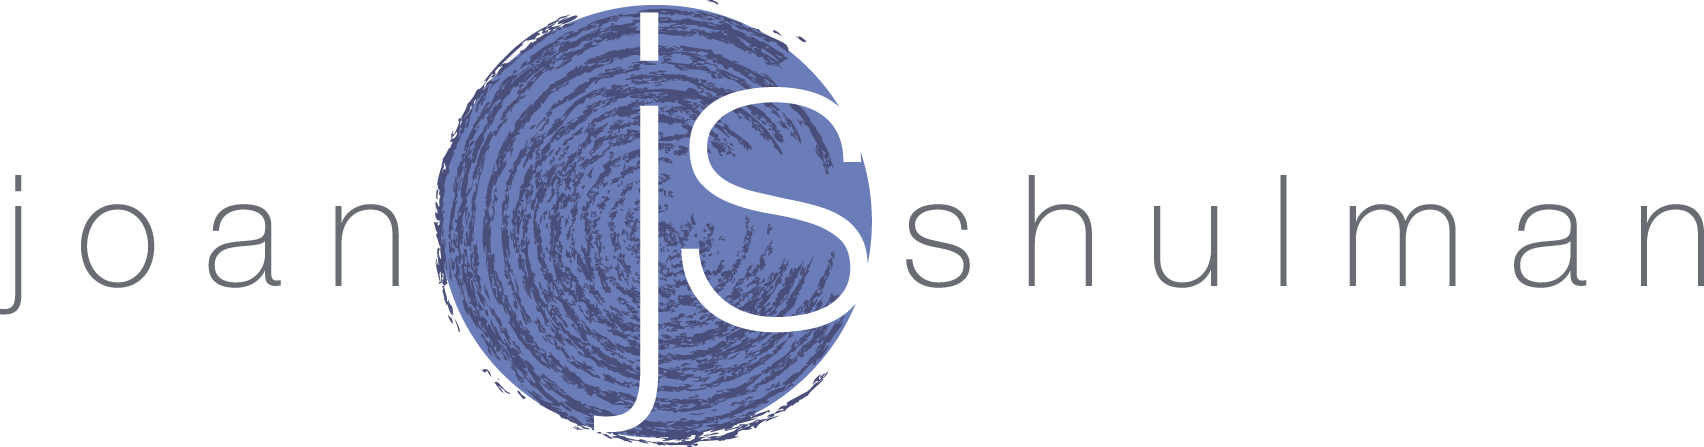 Joan Shulman logo